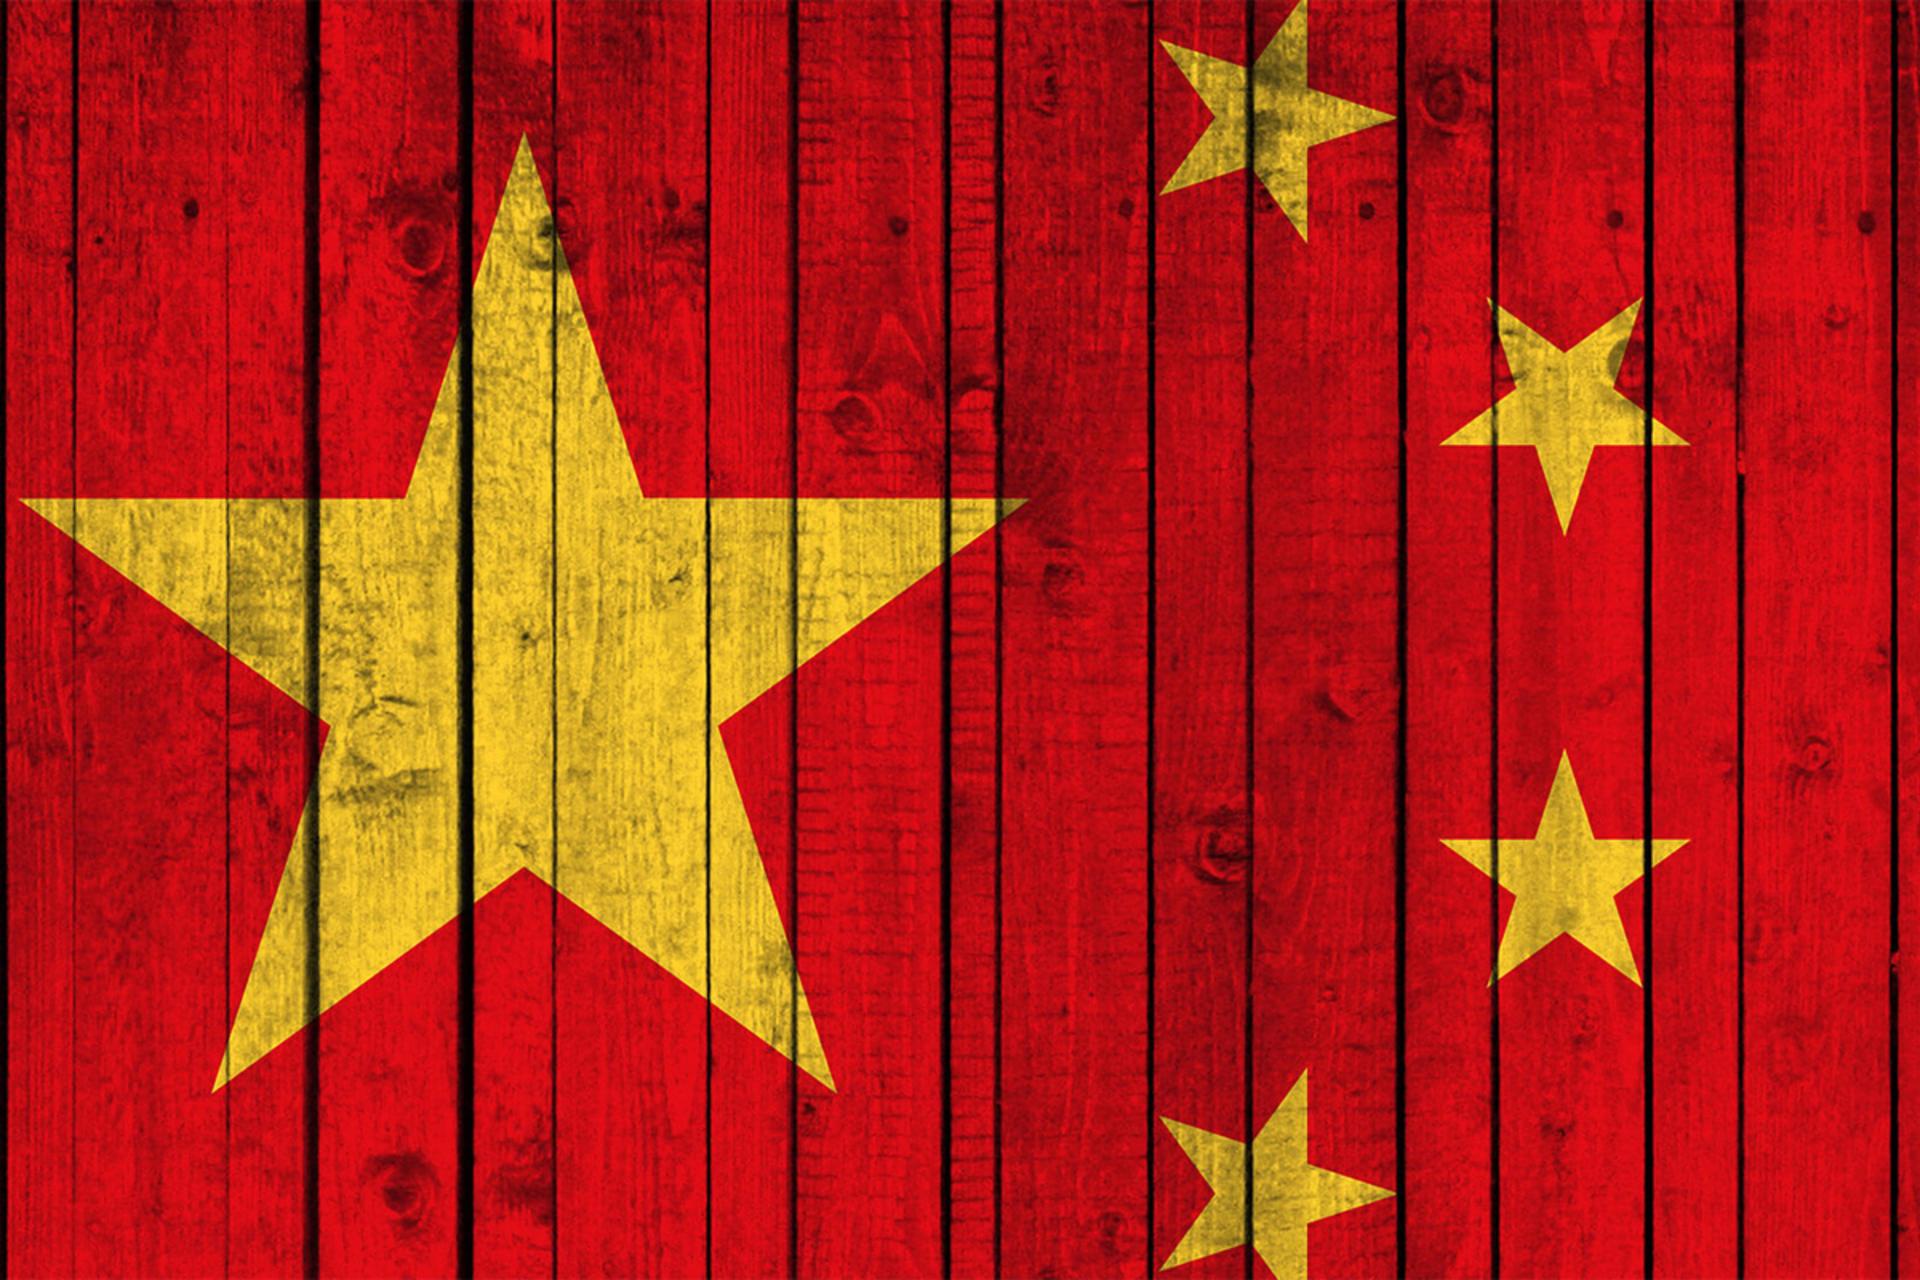 پرچم چین / China Flag ستاره زرد روی دیوار قرمز